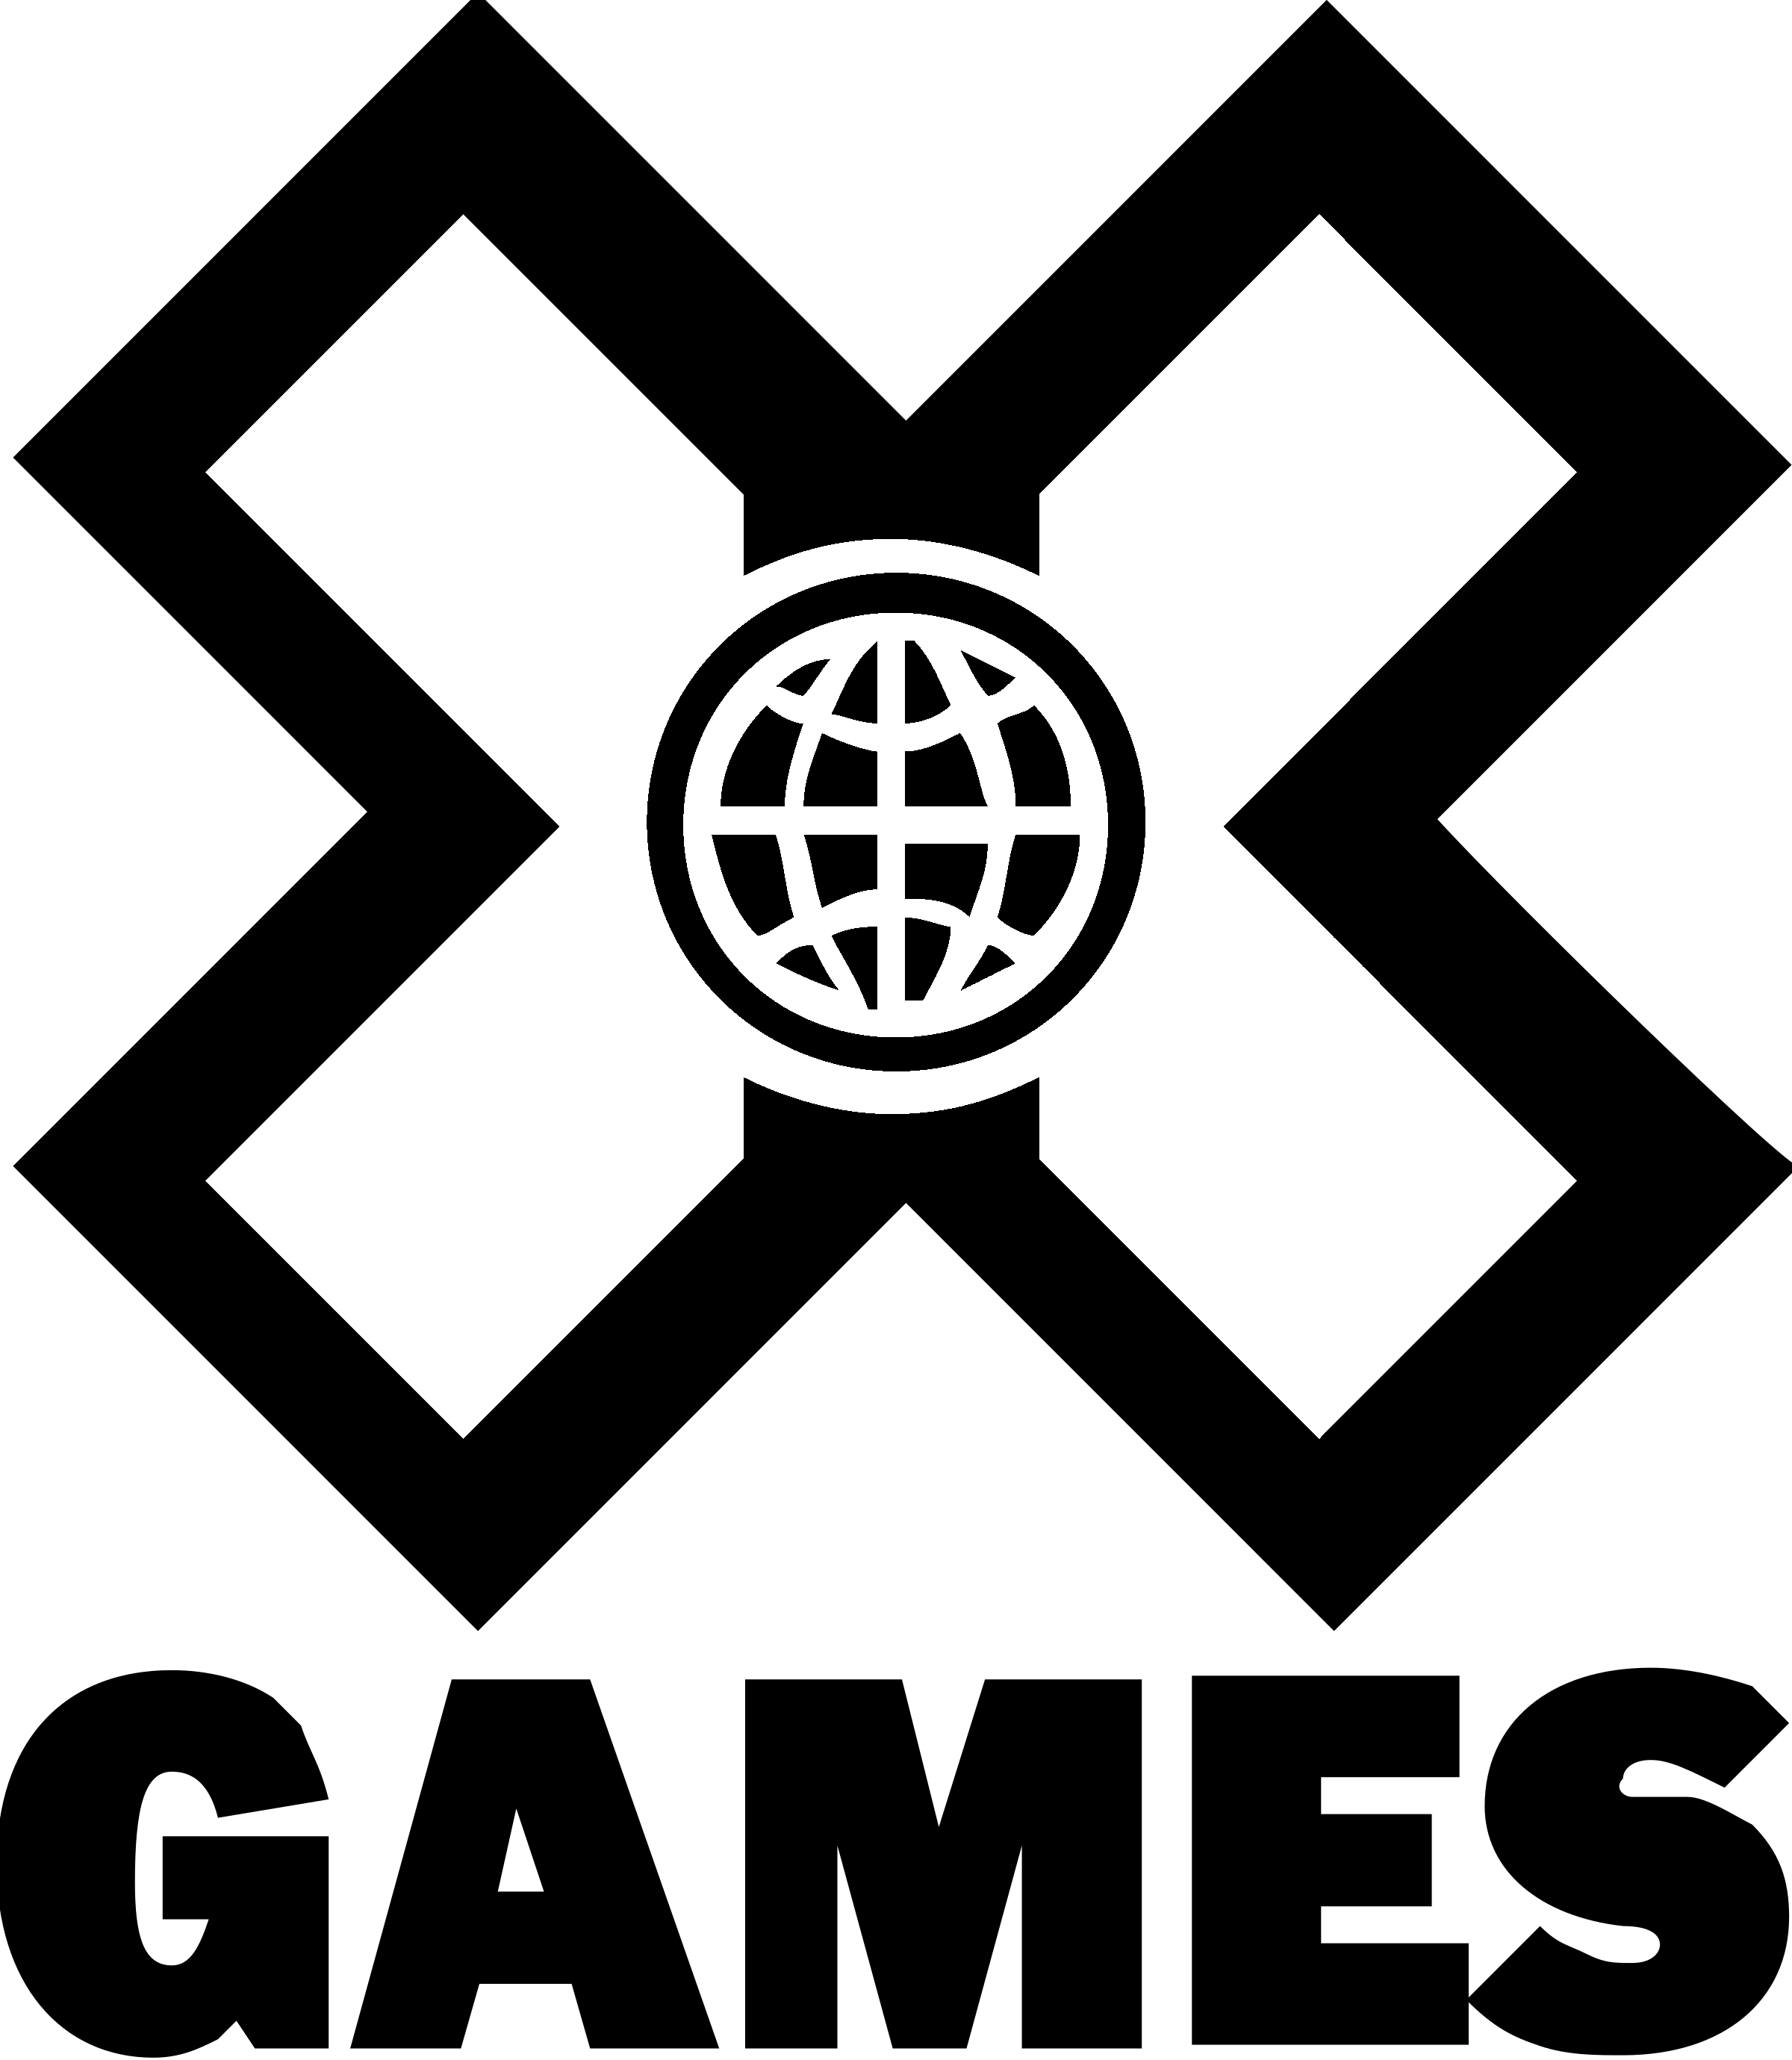 X Games Logo - X Games Logo PNG Transparent & SVG Vector - Freebie Supply